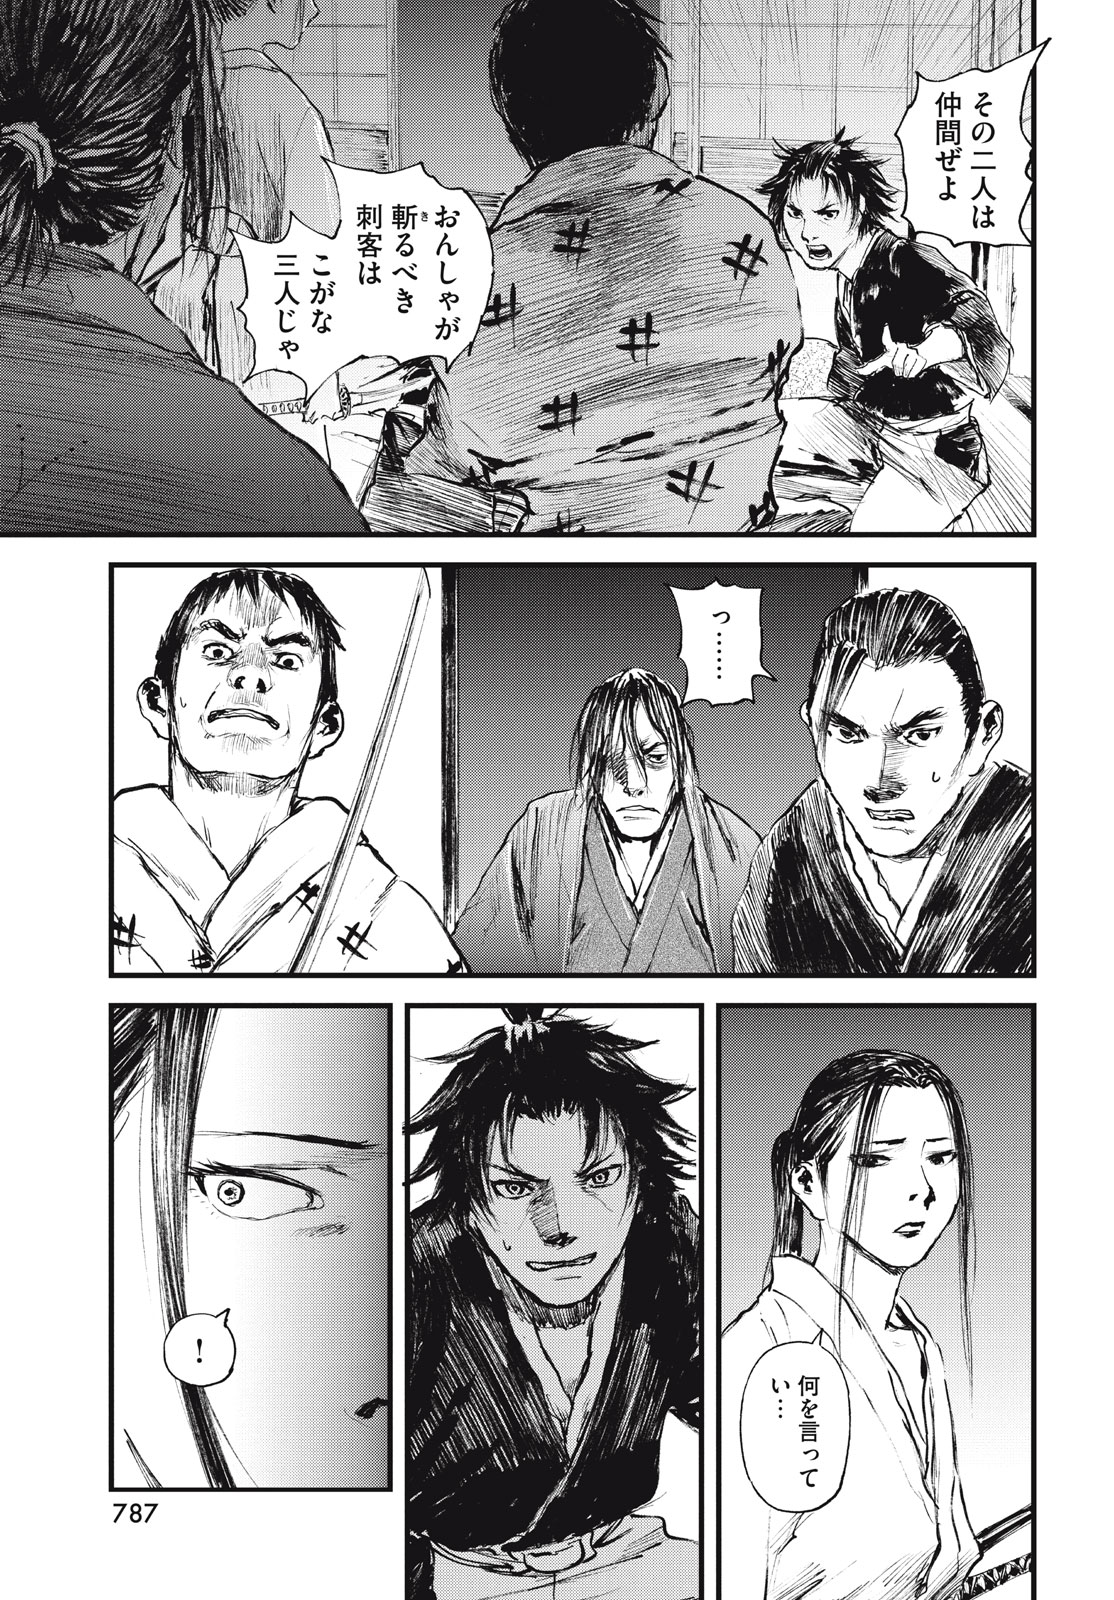 Blade of the Immortal: Bakumatsu Arc - Chapter 55 - Page 5